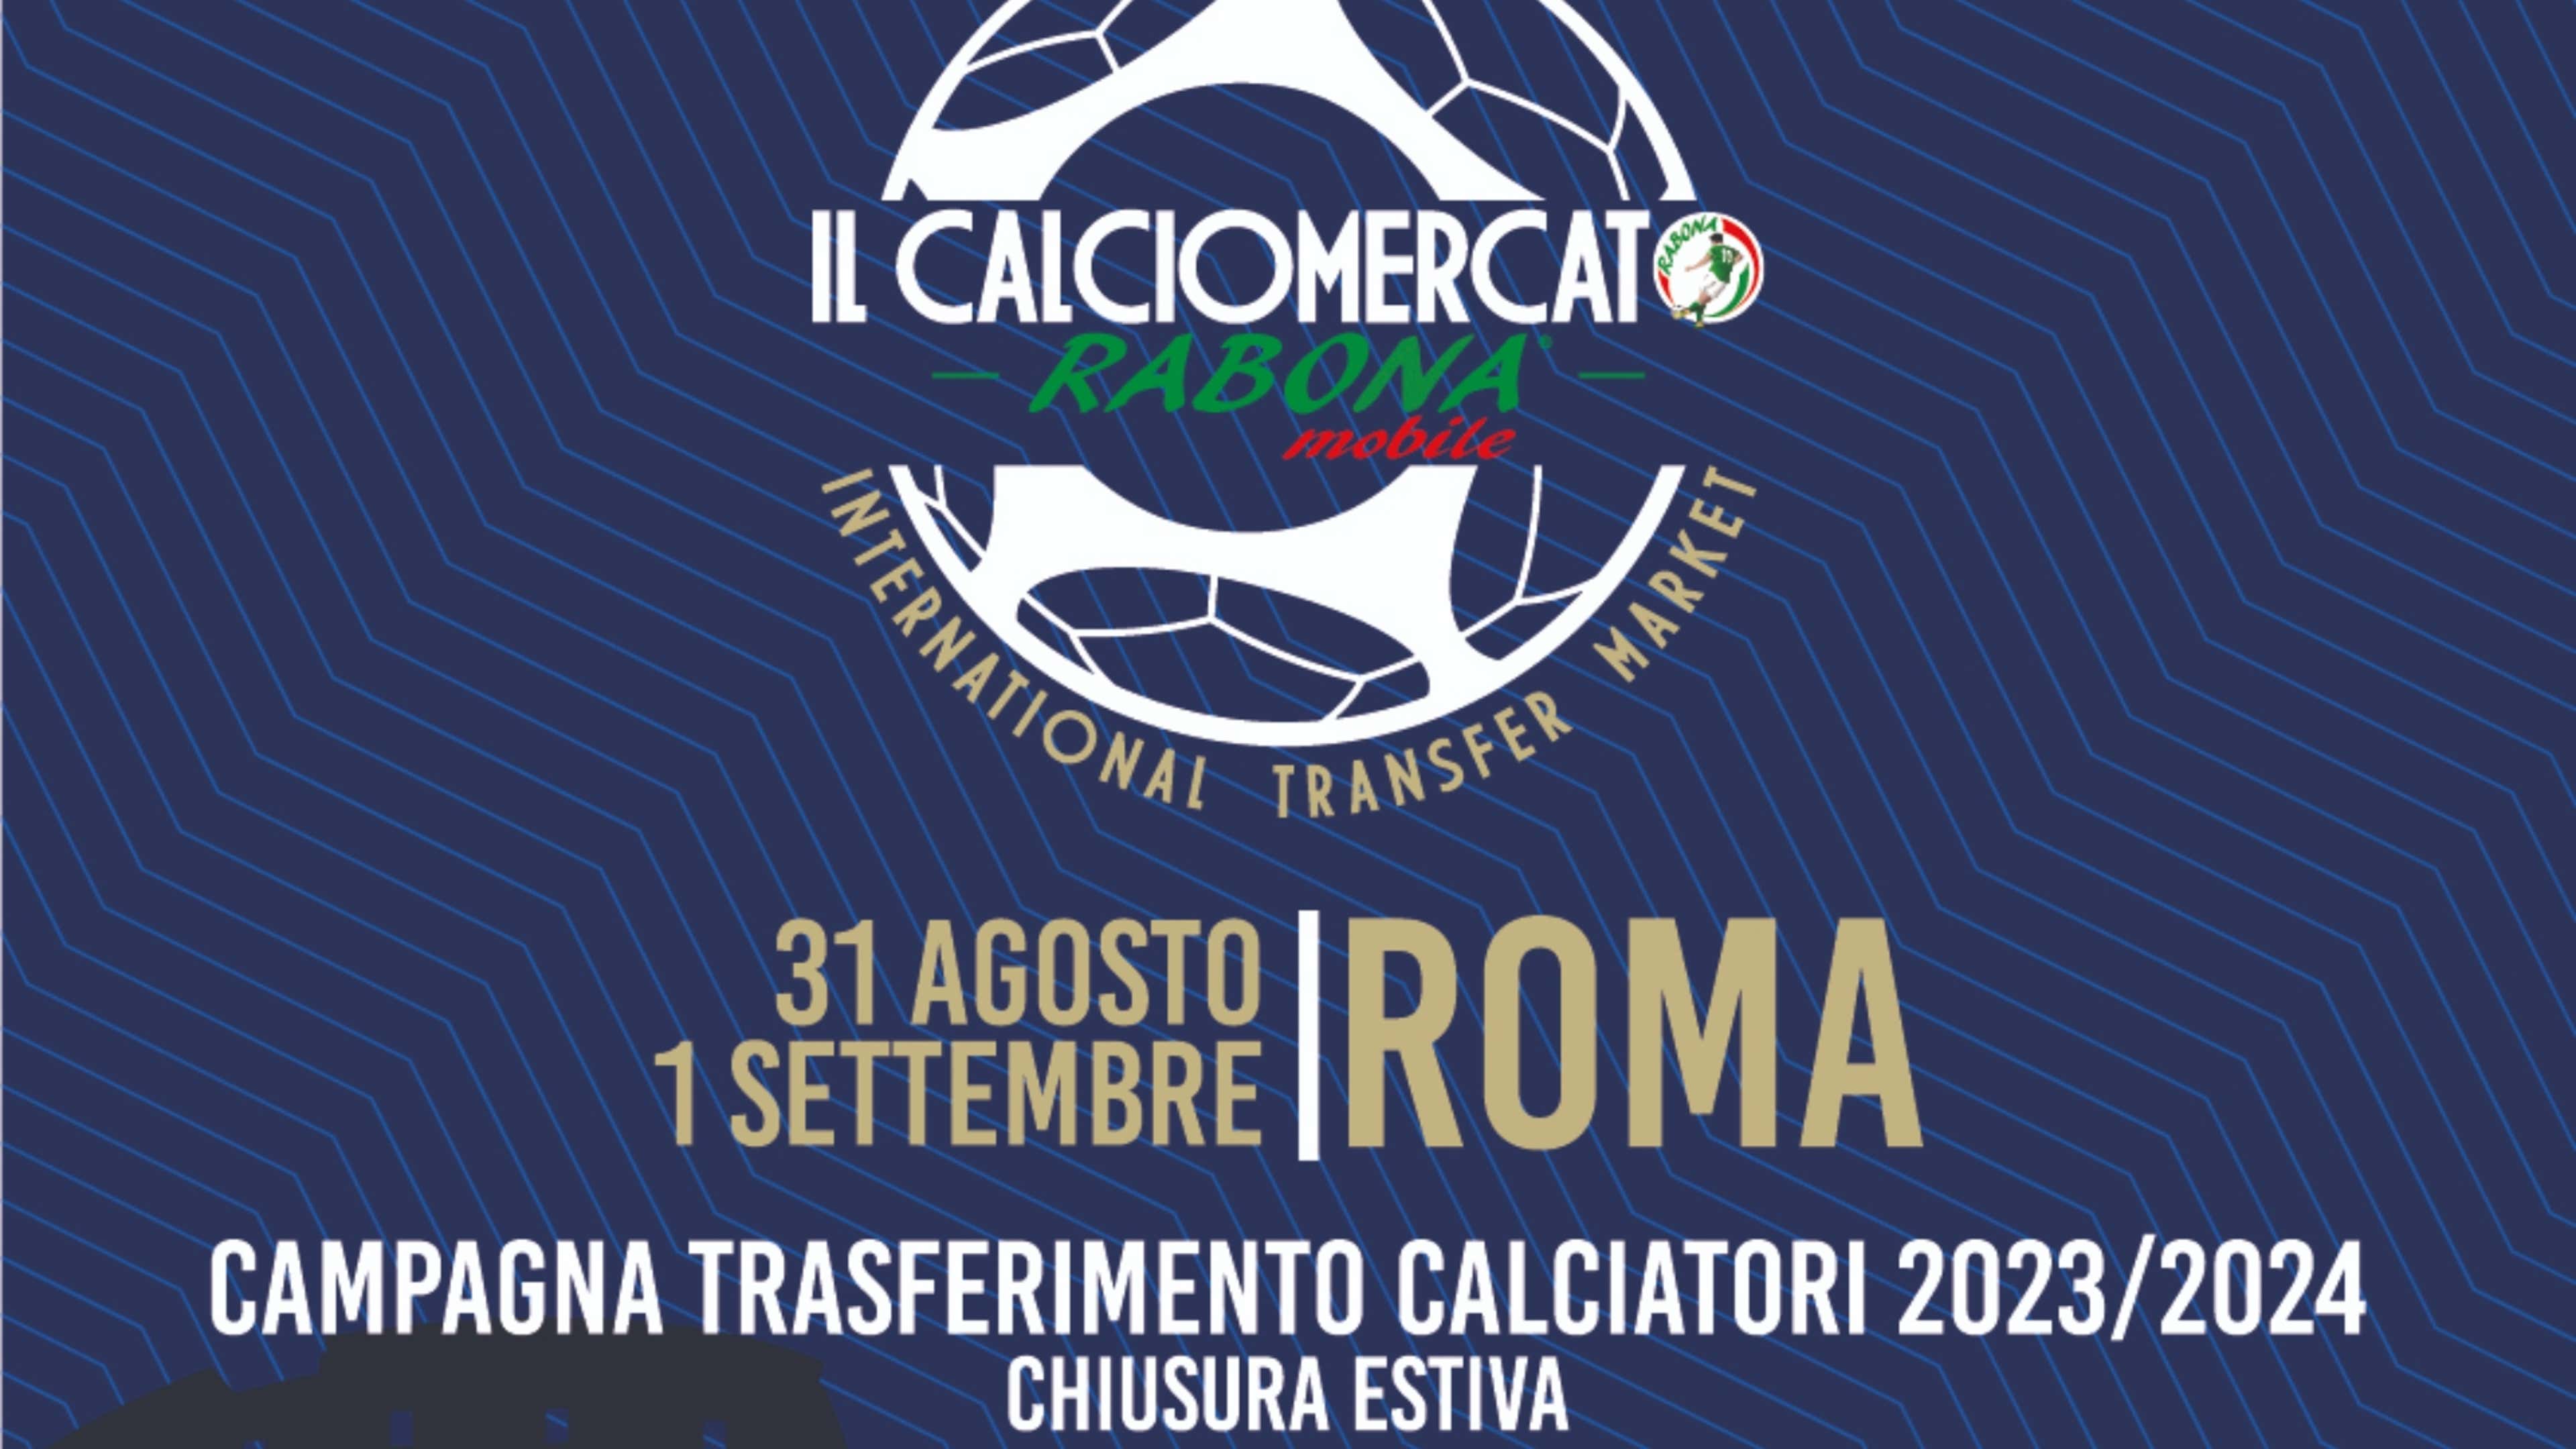 Calciomercato International Transfer Market Rabona Mobile 2023-2024